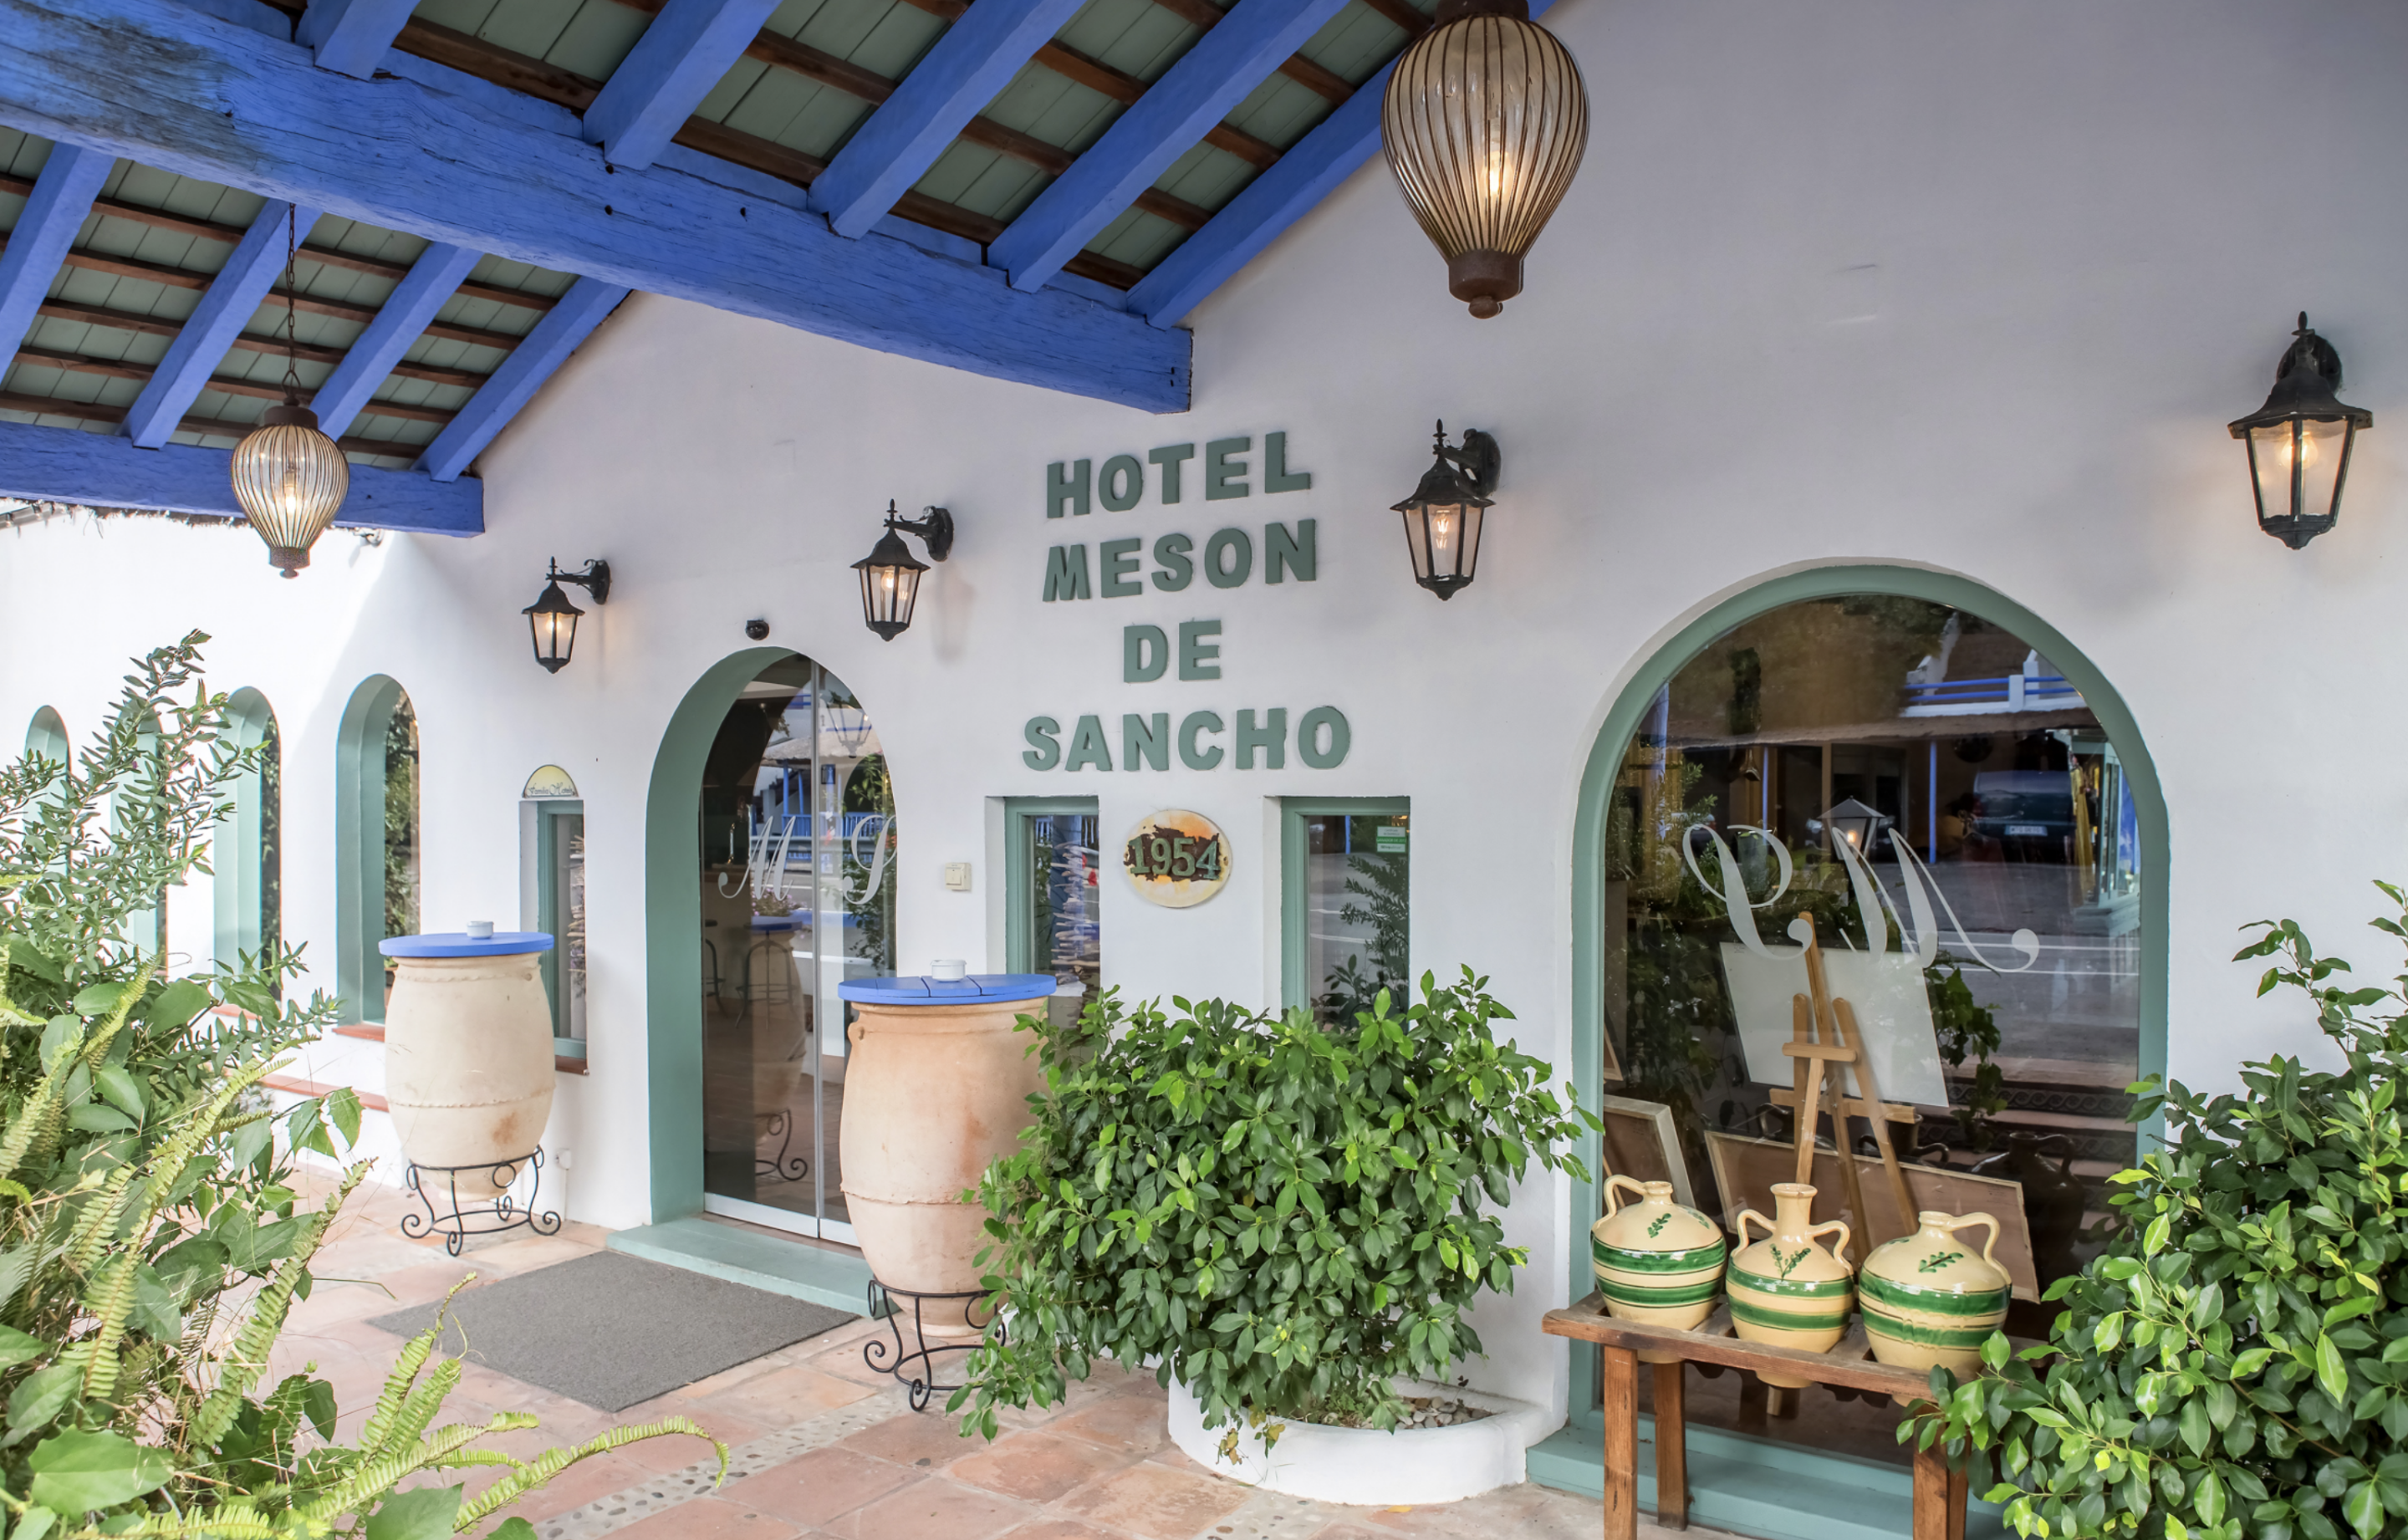 Hotel Mesón de Sancho